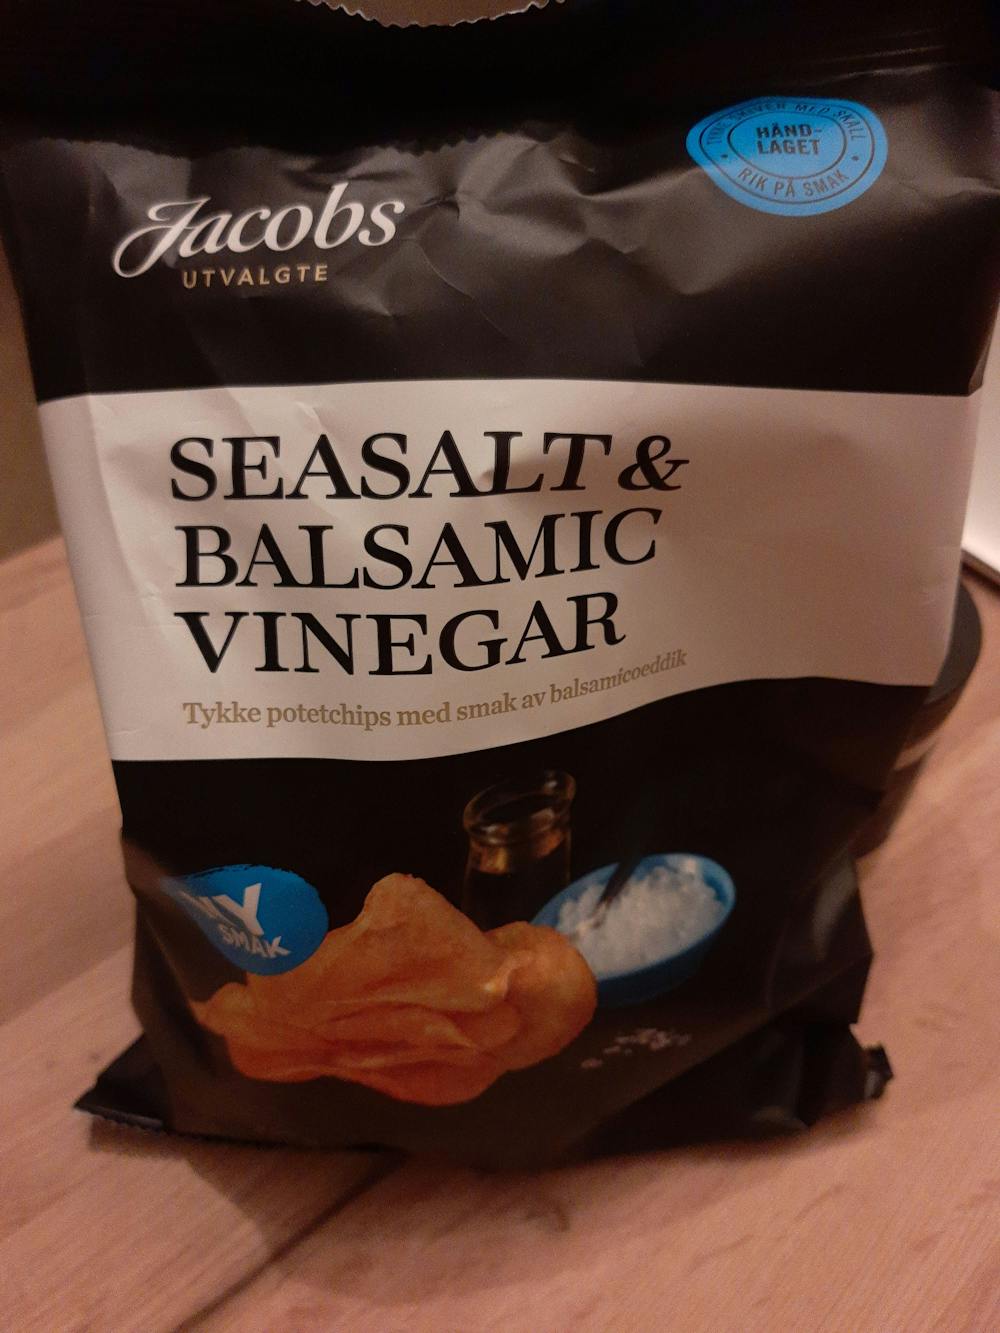 Seasalt & balsamic vinegar, Jacobs utvalgte